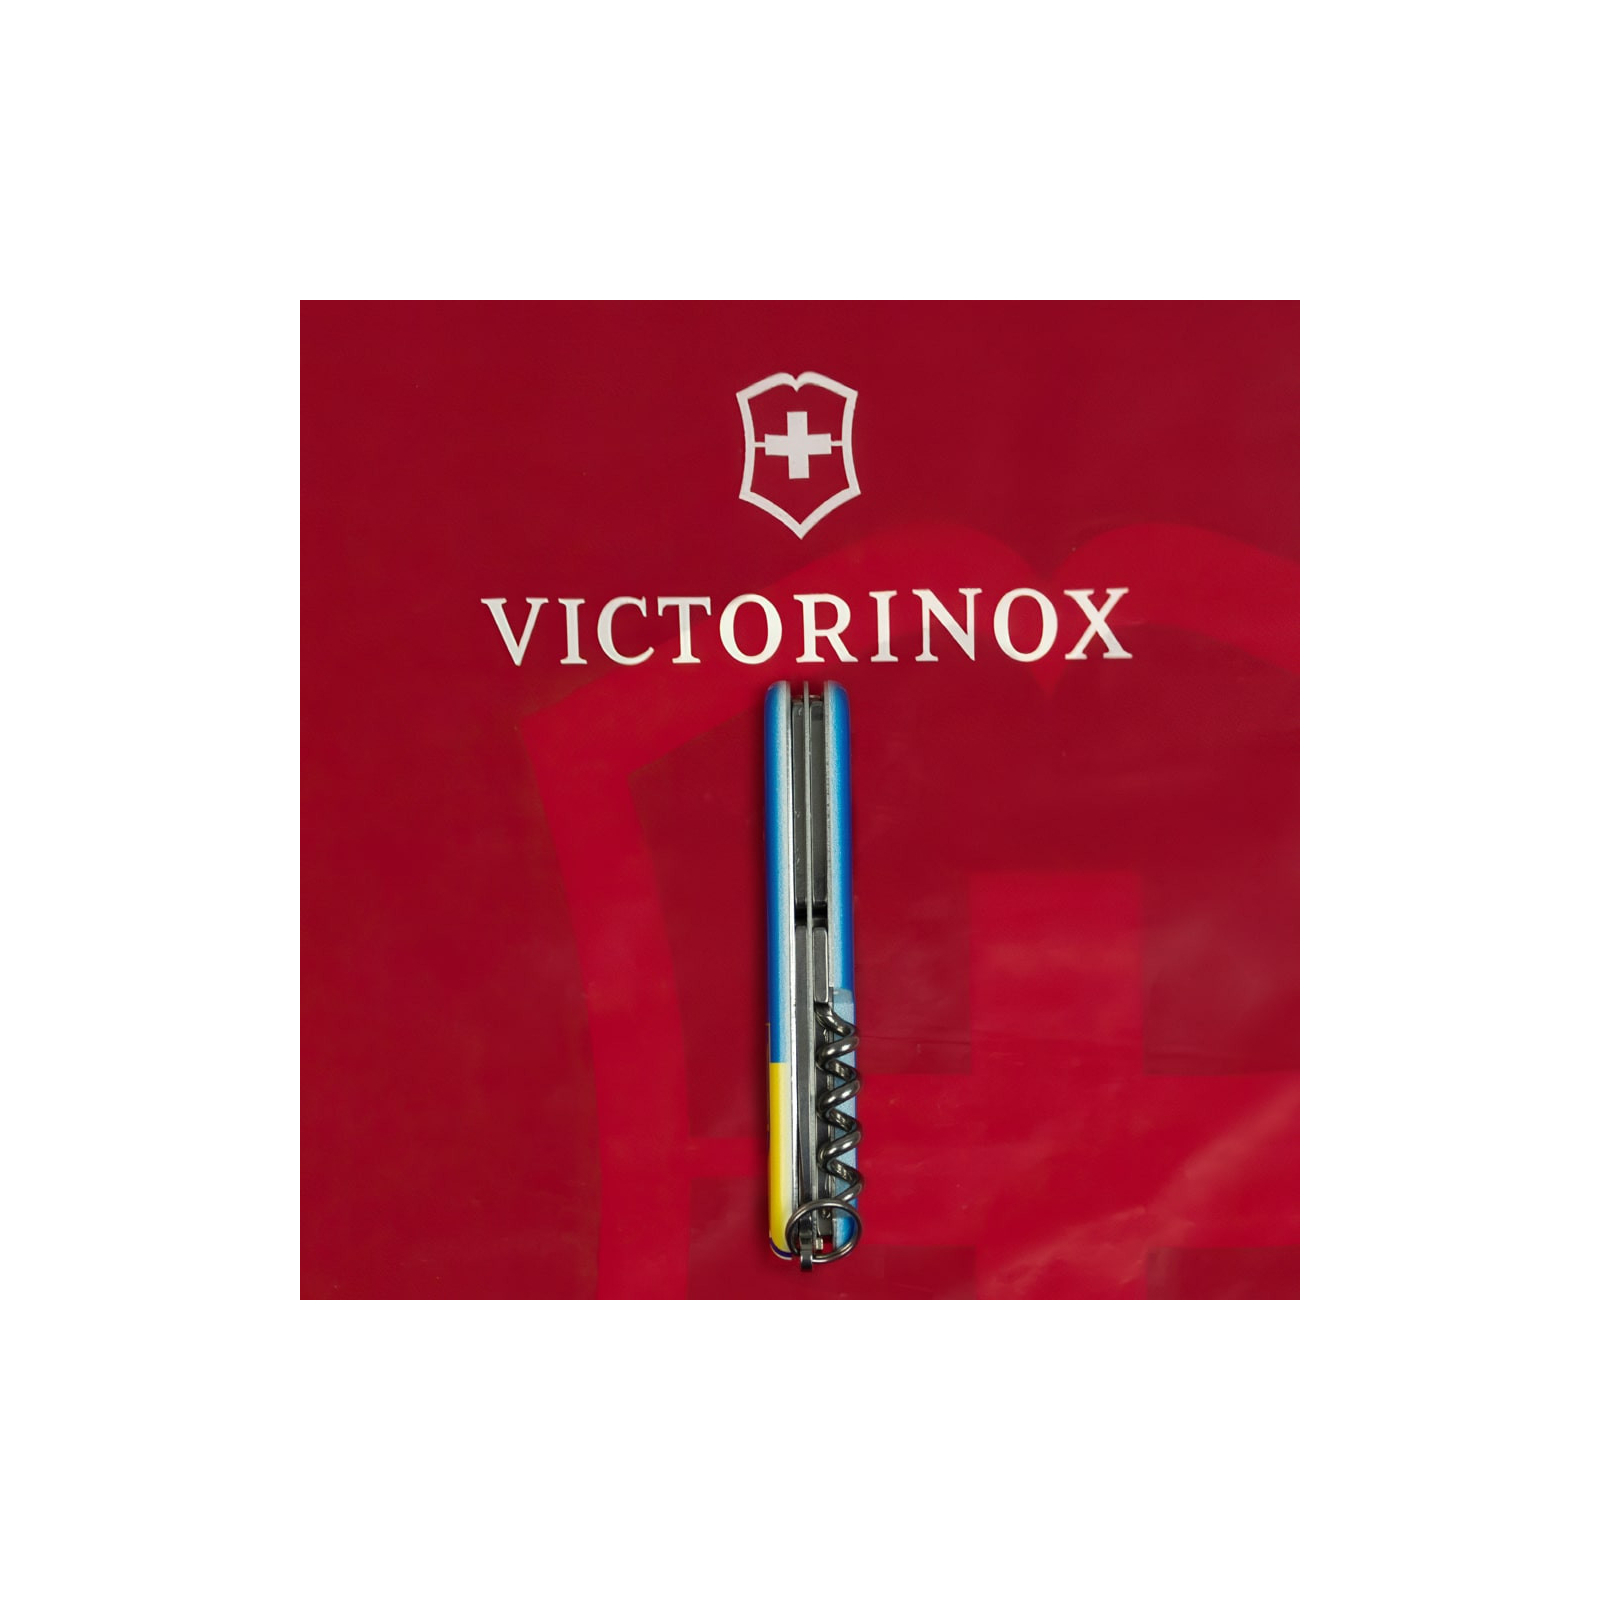 Нож Victorinox Spartan Ukraine 91 мм Жовто-синій малюнок (1.3603.7_T3100p) изображение 7